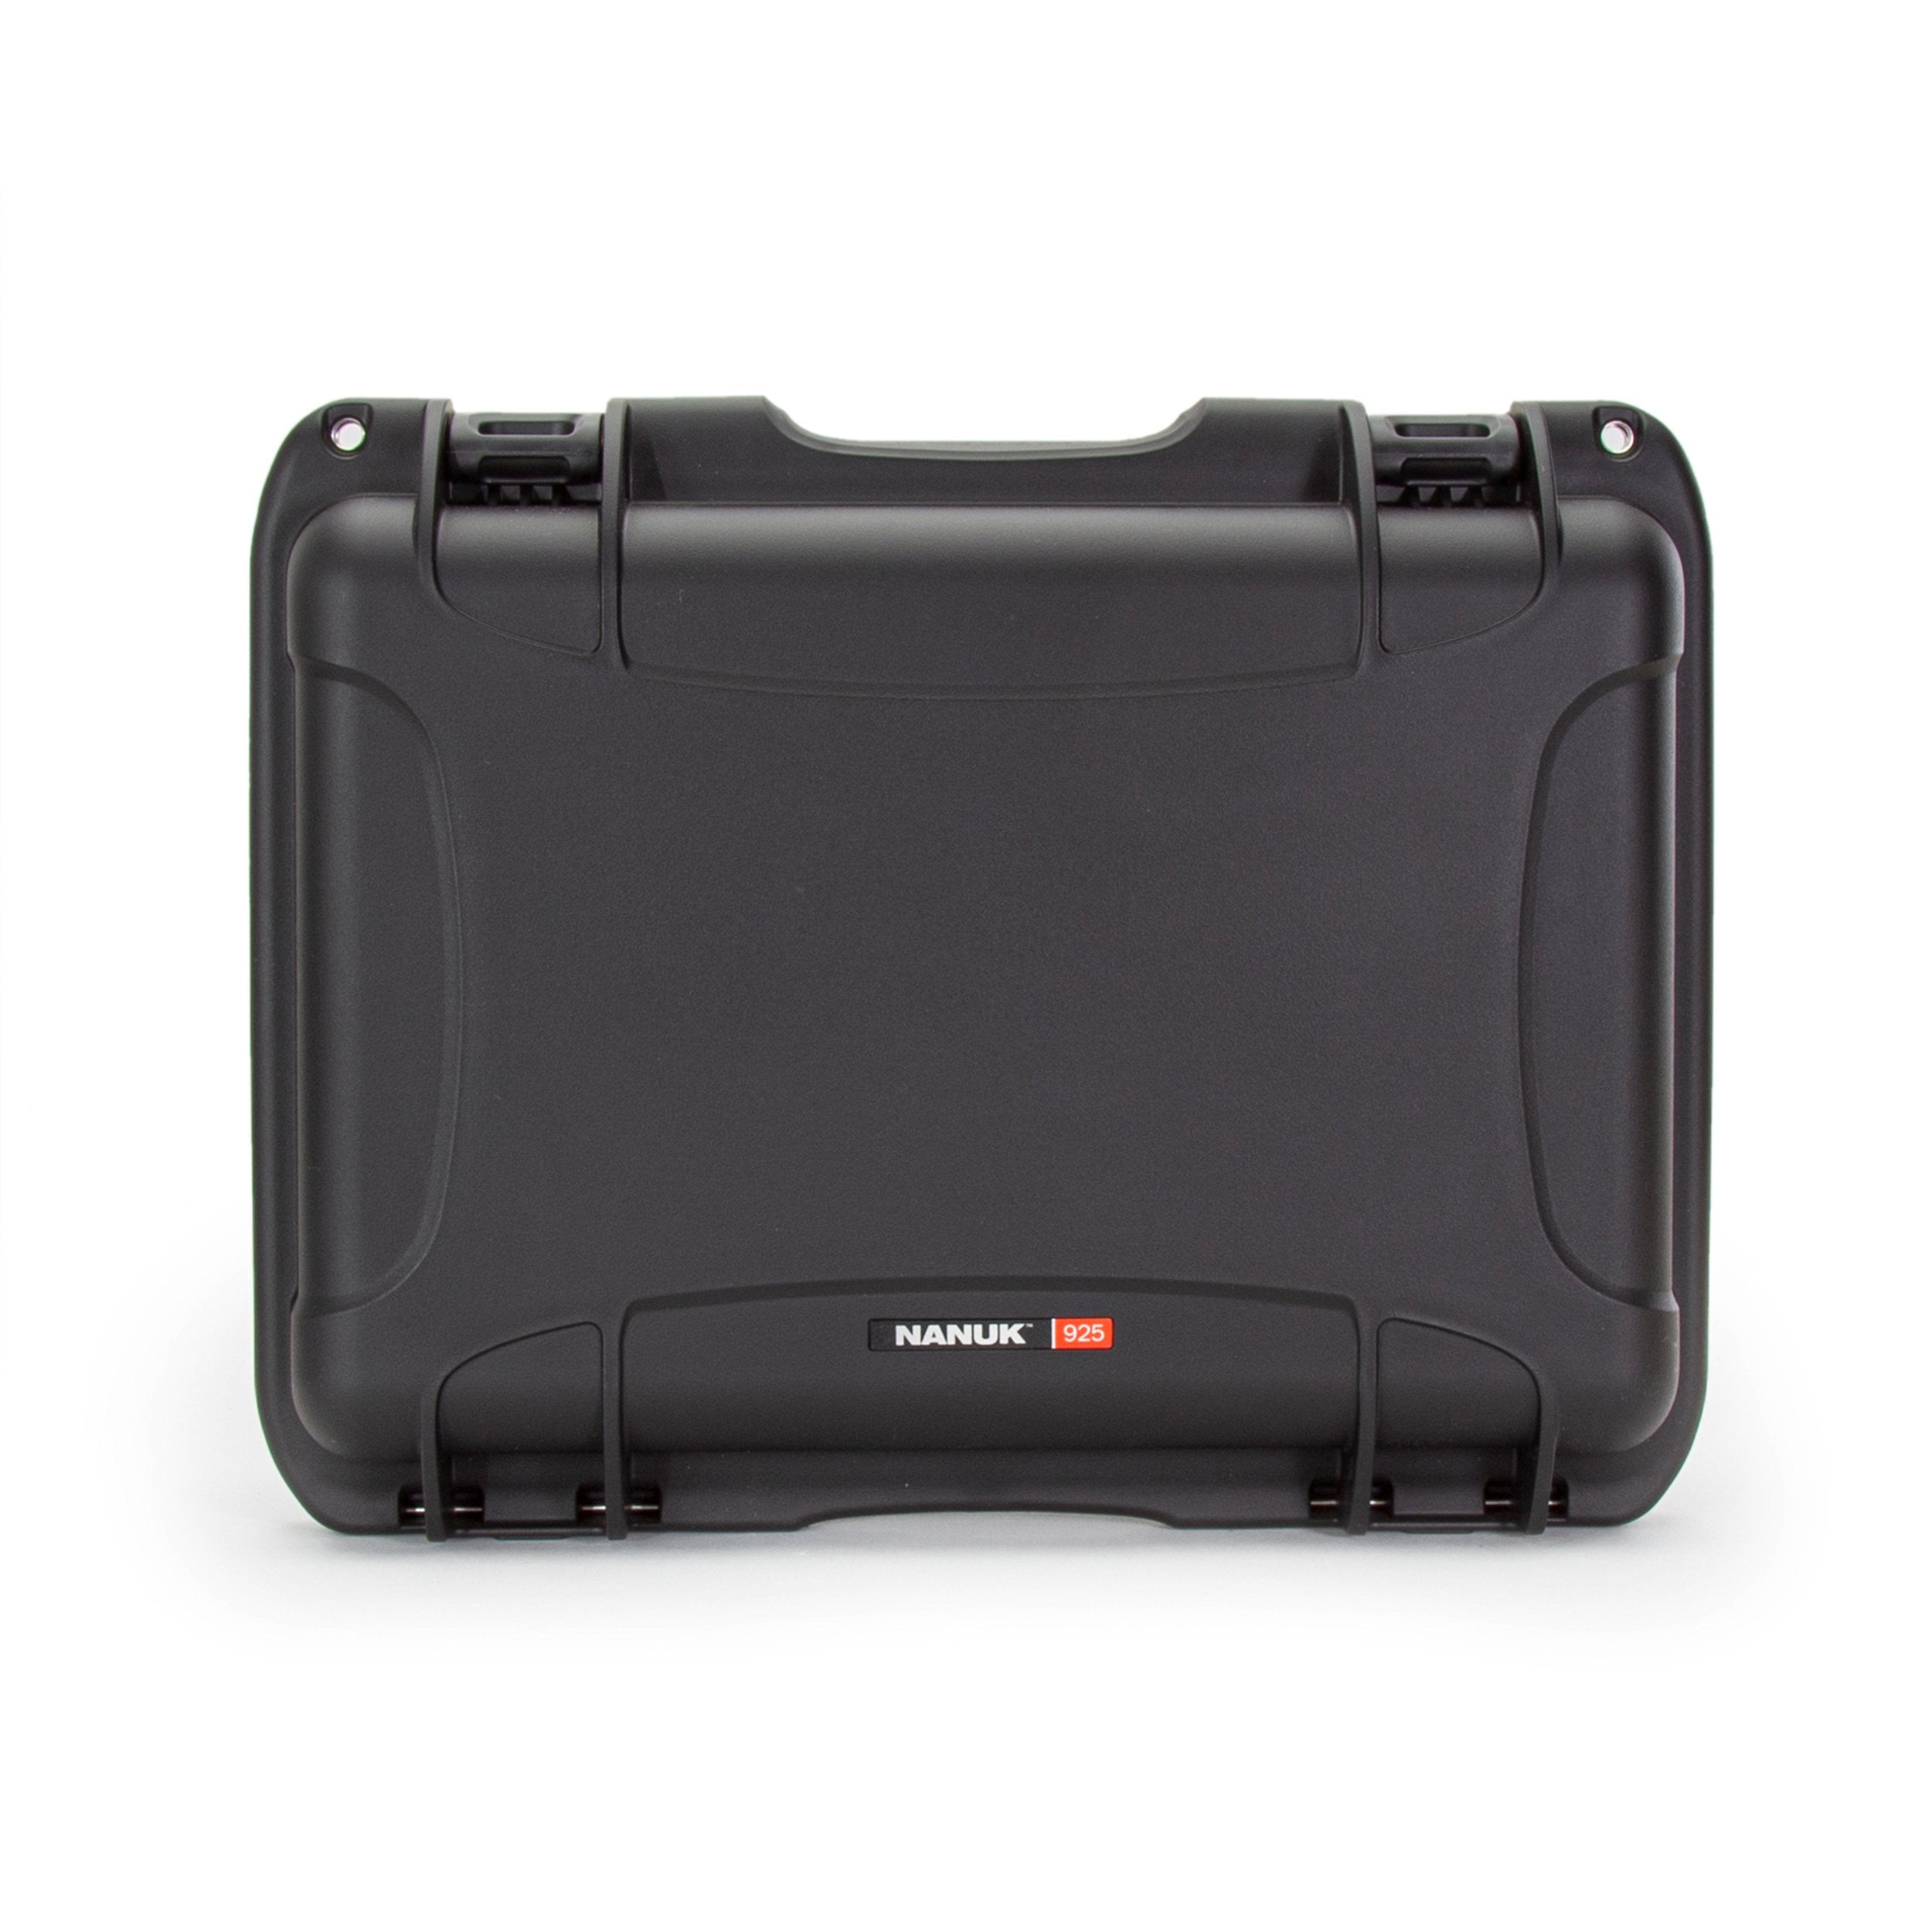 Nanuk 925 Waterproof Hard Case - Black